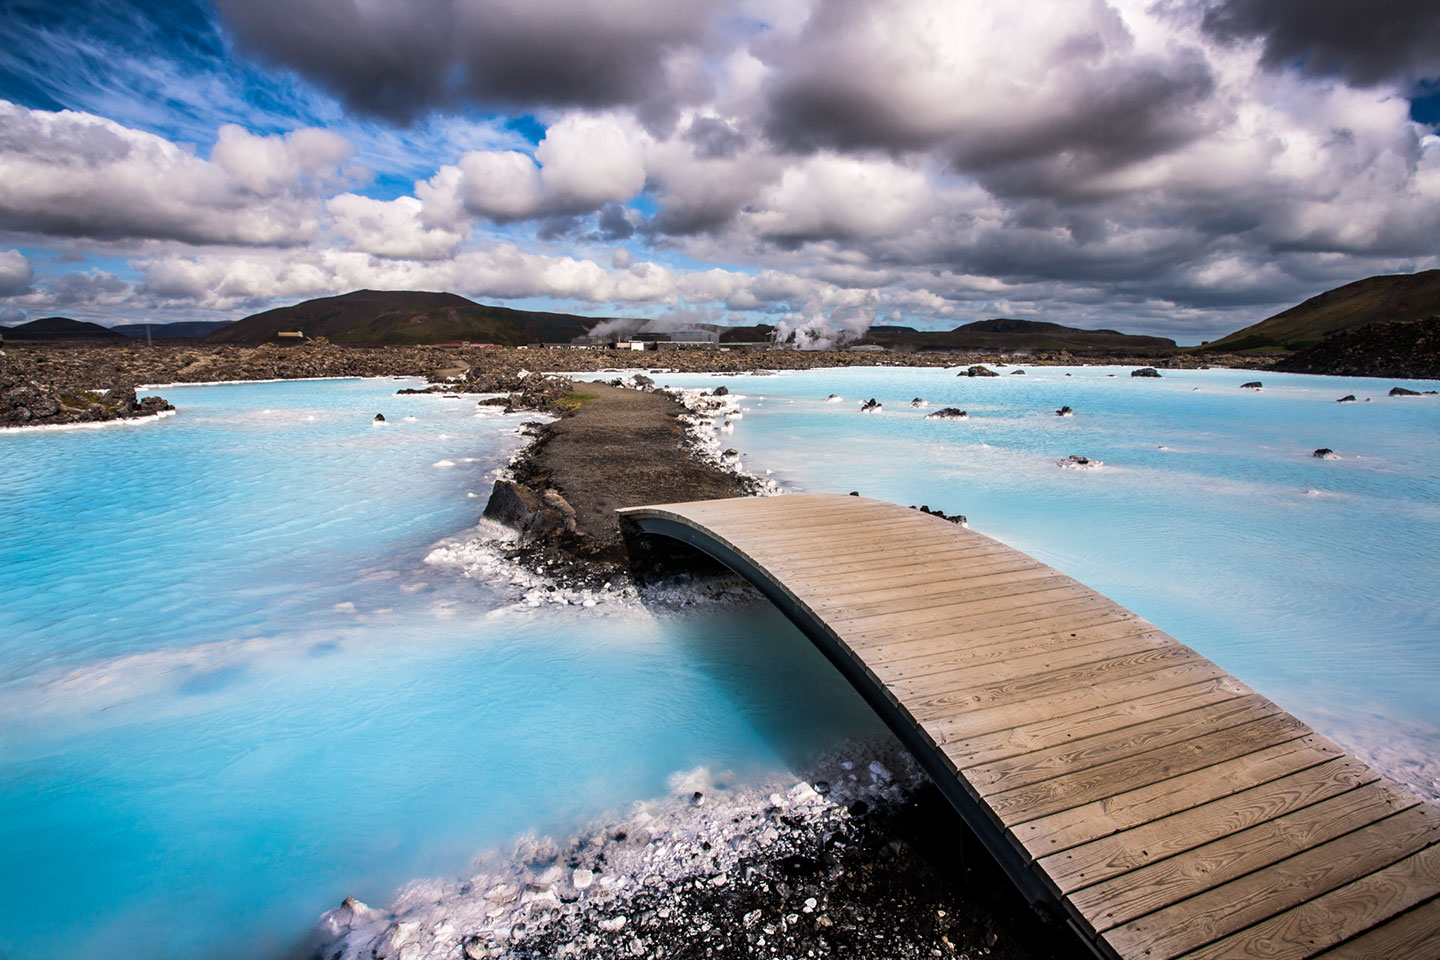 Iceland's blue lagoon thermal baths